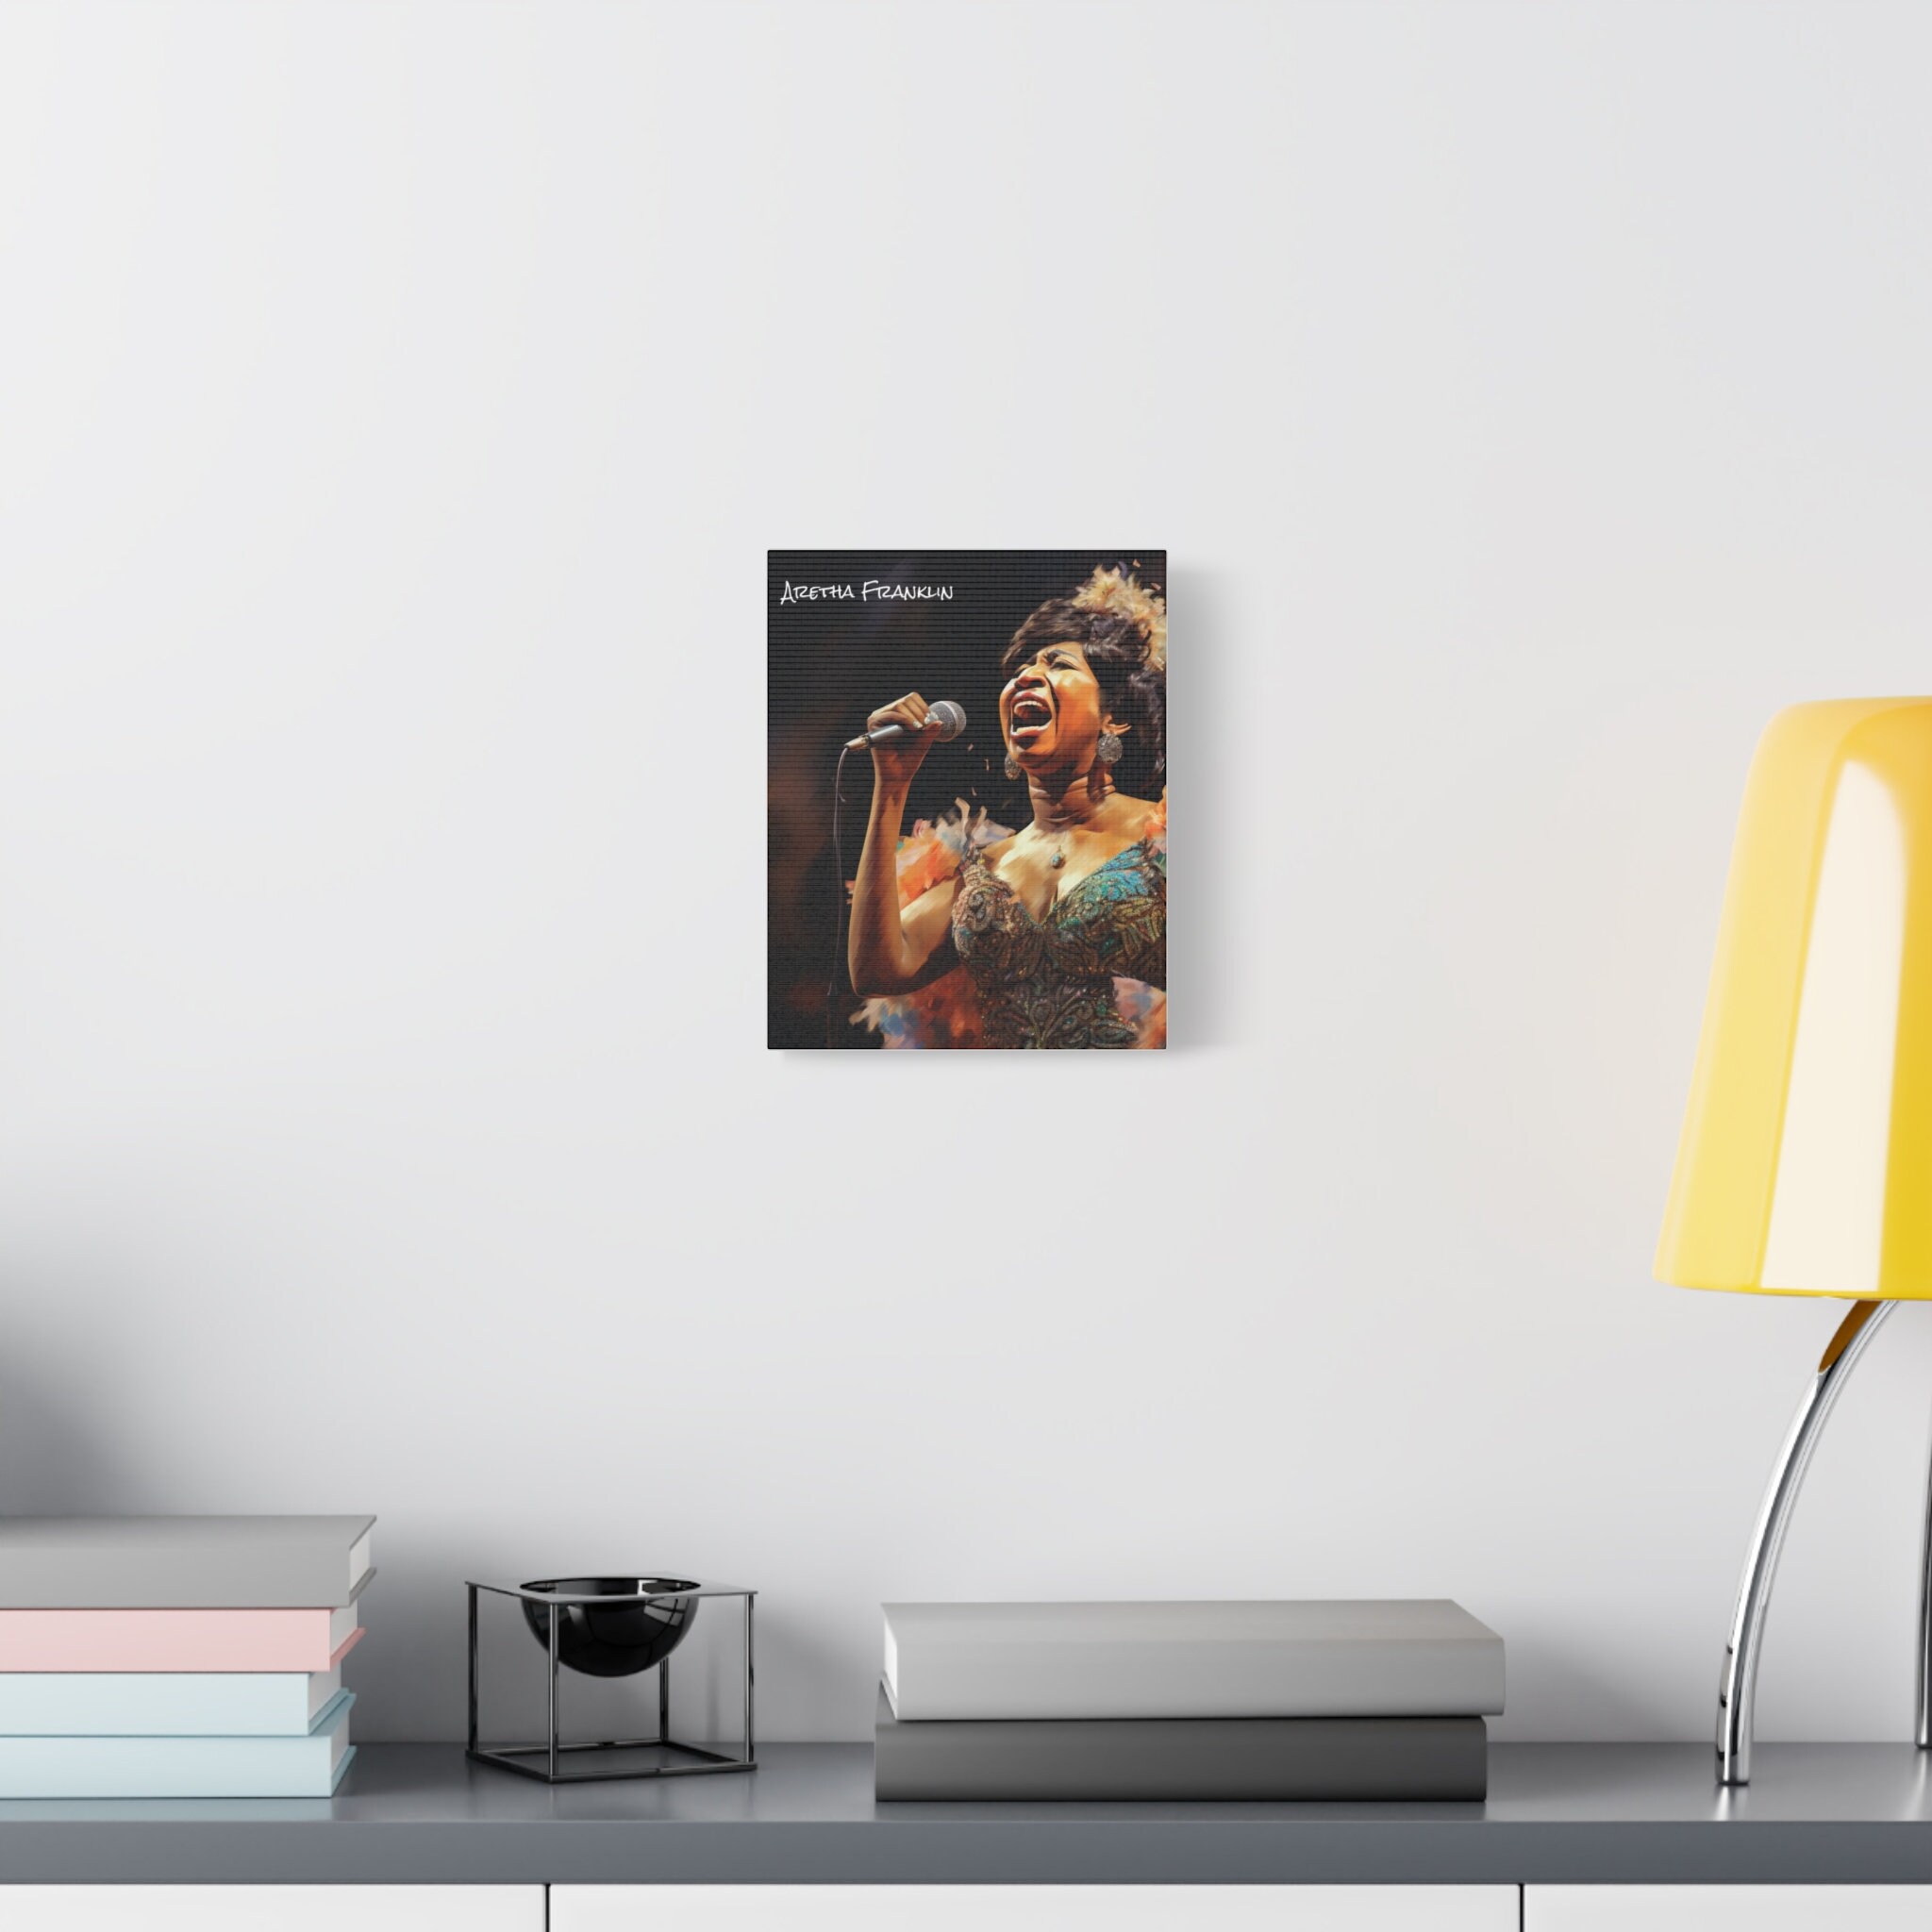 Aretha Franklin Photo-Realistic Canvas Portrait